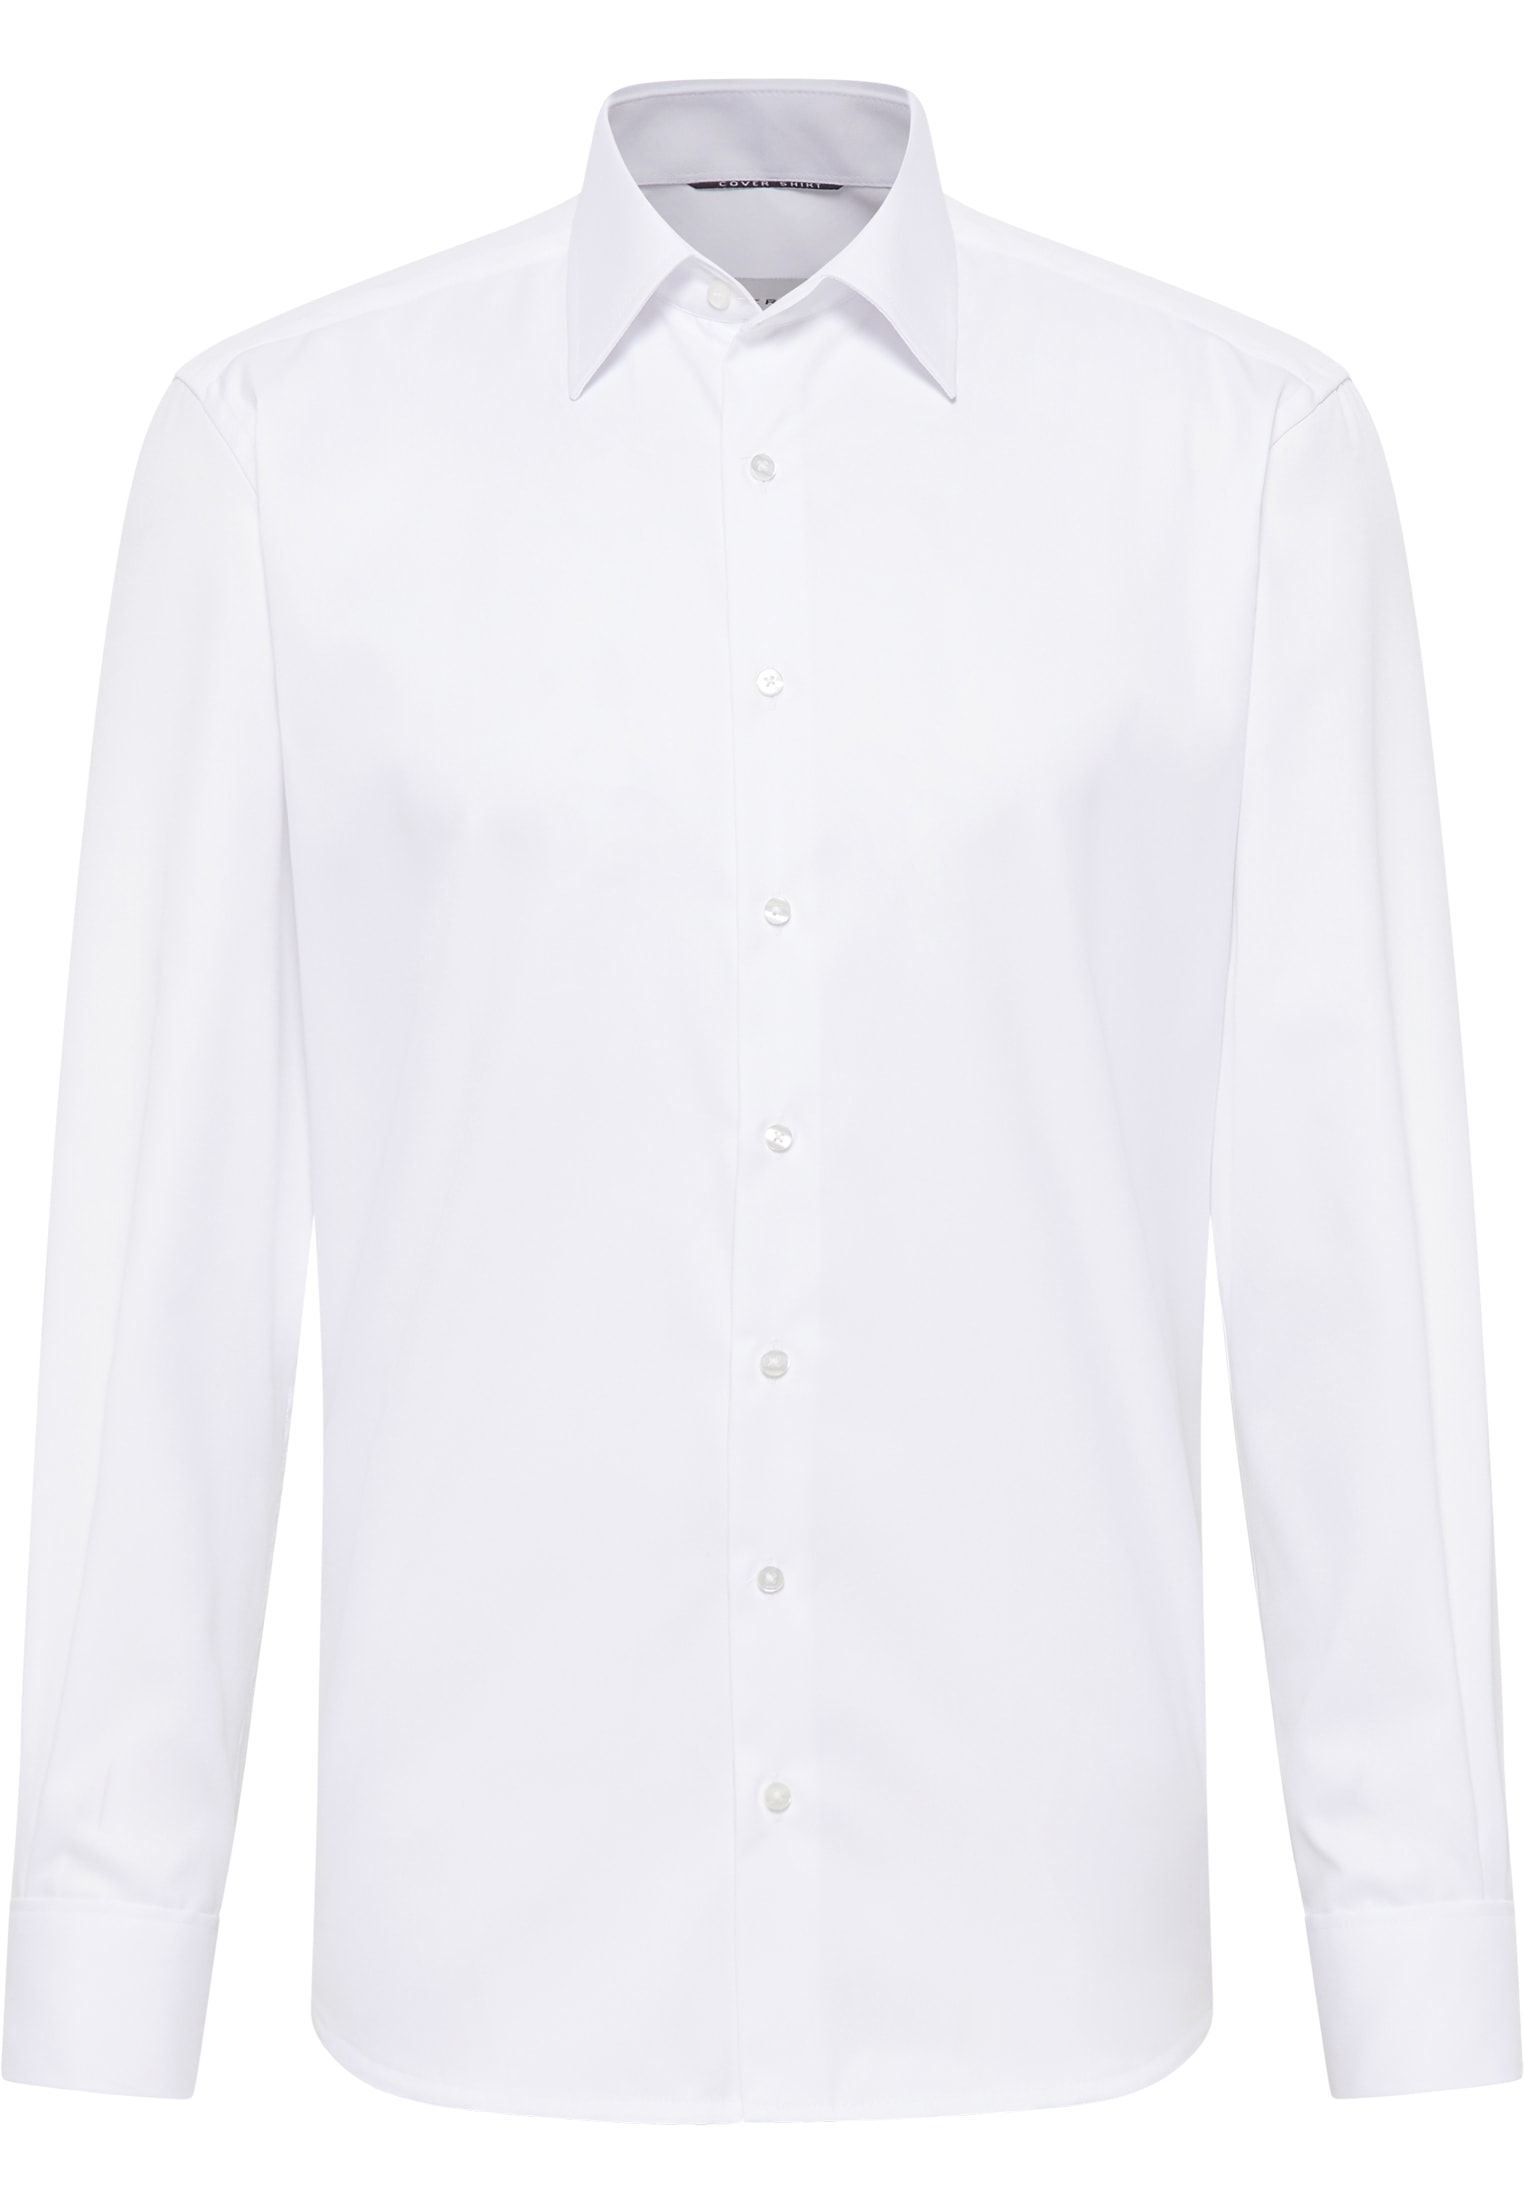 | unifarben weiß Cover weiß Shirt | FIT | Langarm COMFORT 1SH05509-00-01-41-1/1 | 41 in